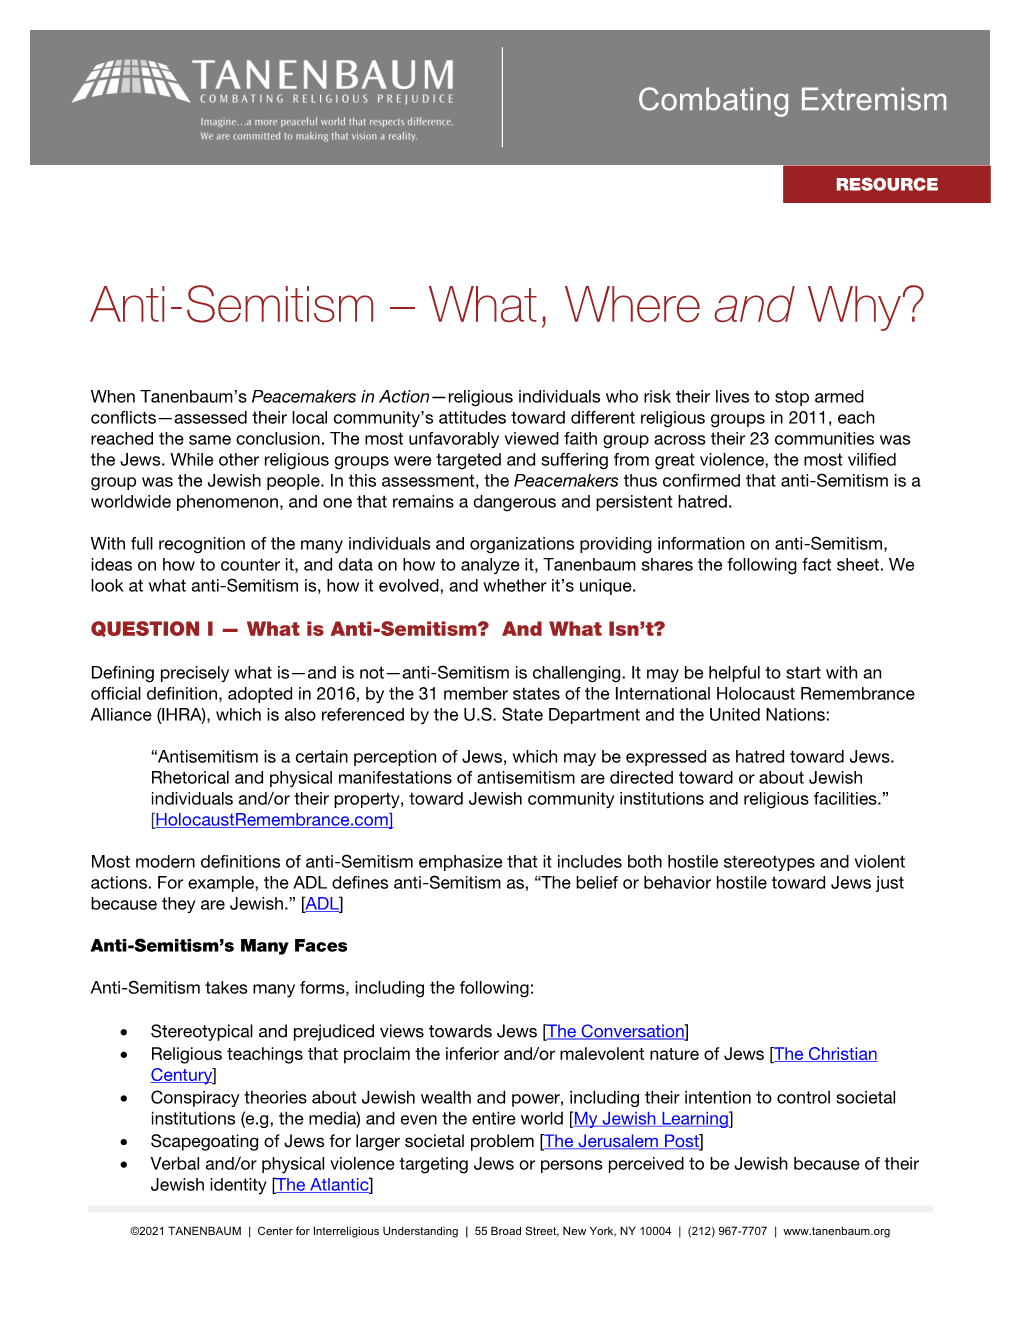 Anti-Semitism – What, Where and Why?